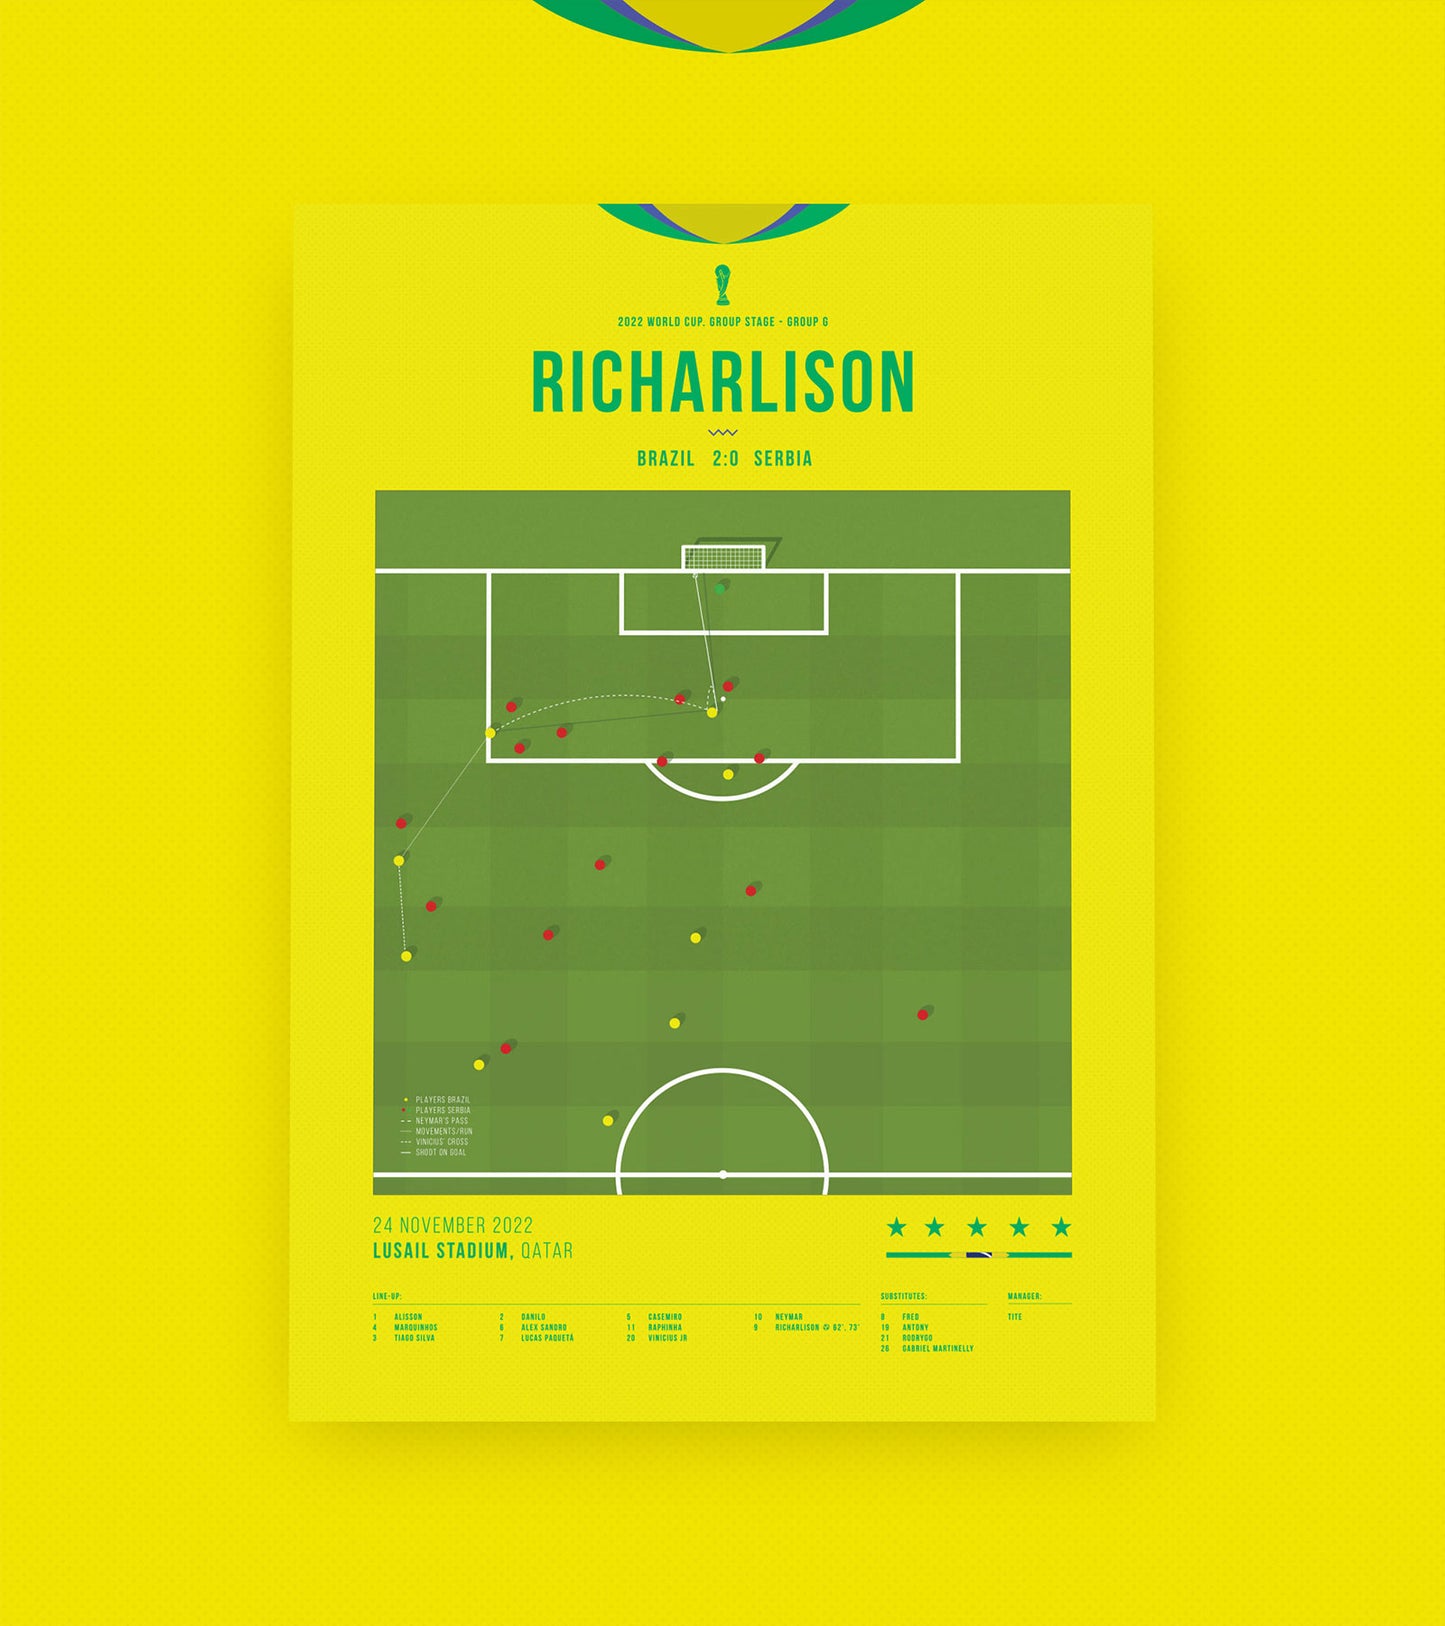 Richarlison Scores Sensational World Cup Goal on Scissor Kick